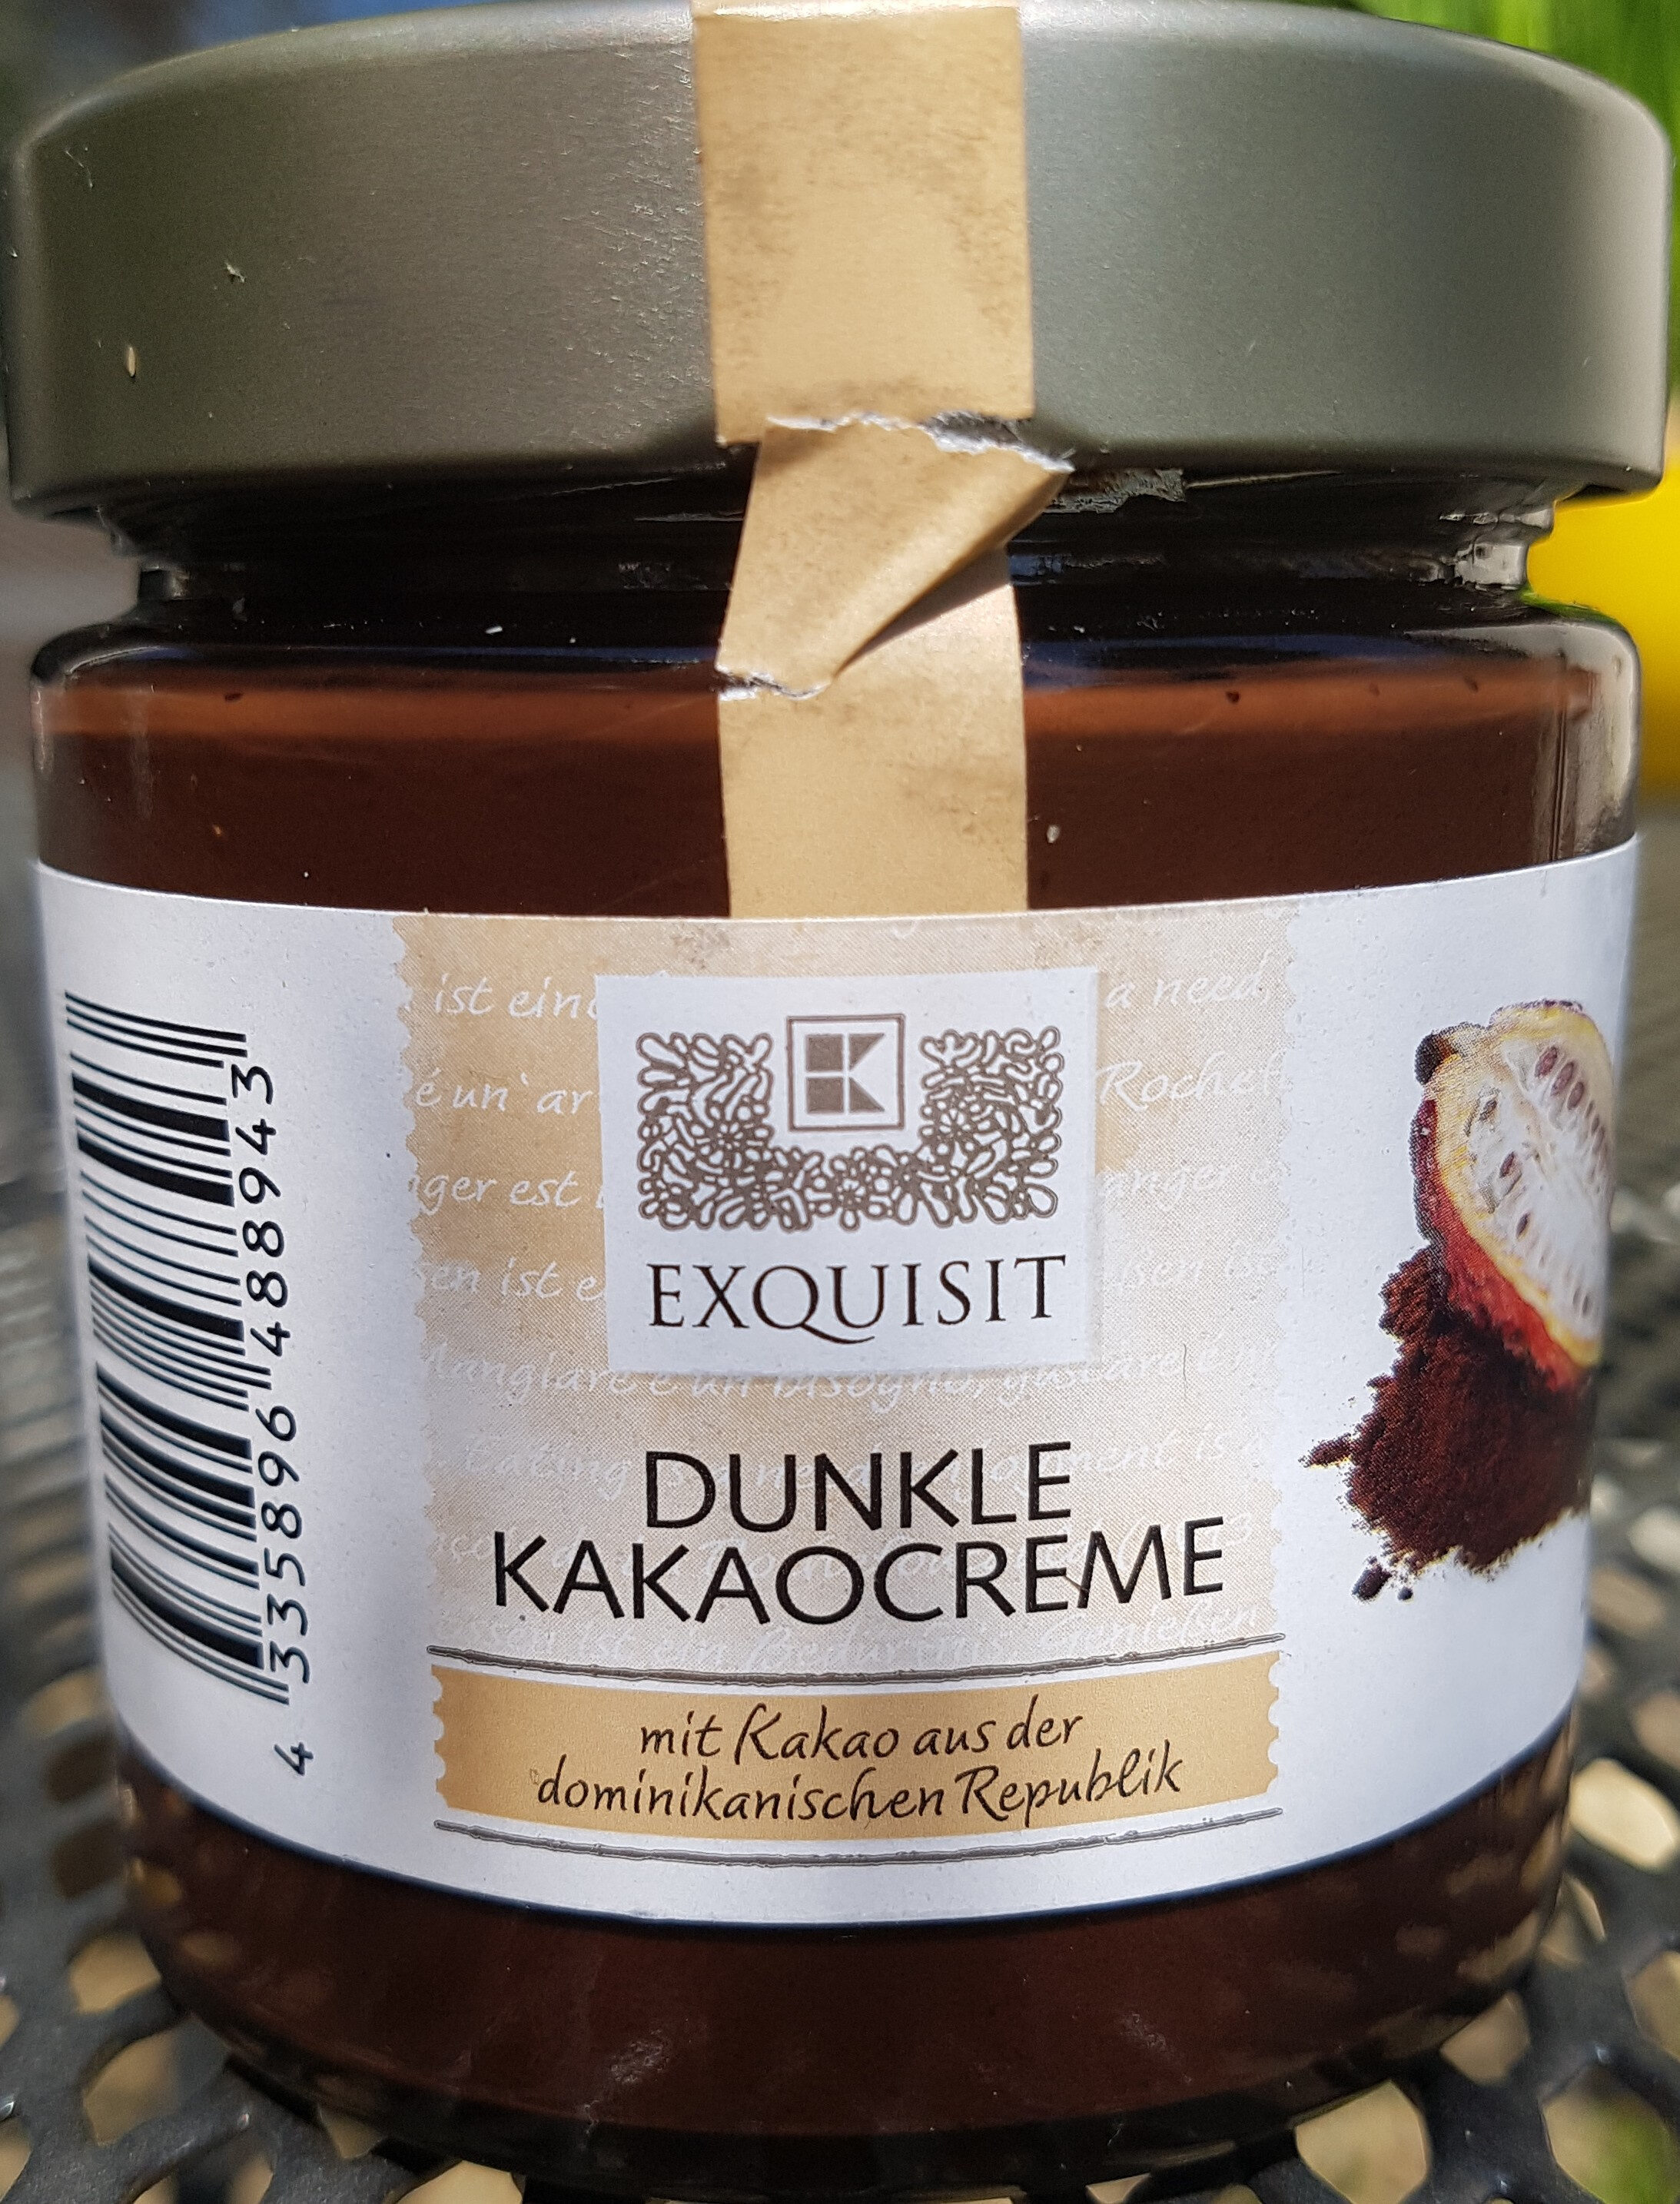 Exquisit Dunkle Kakao-Creme - Product - de